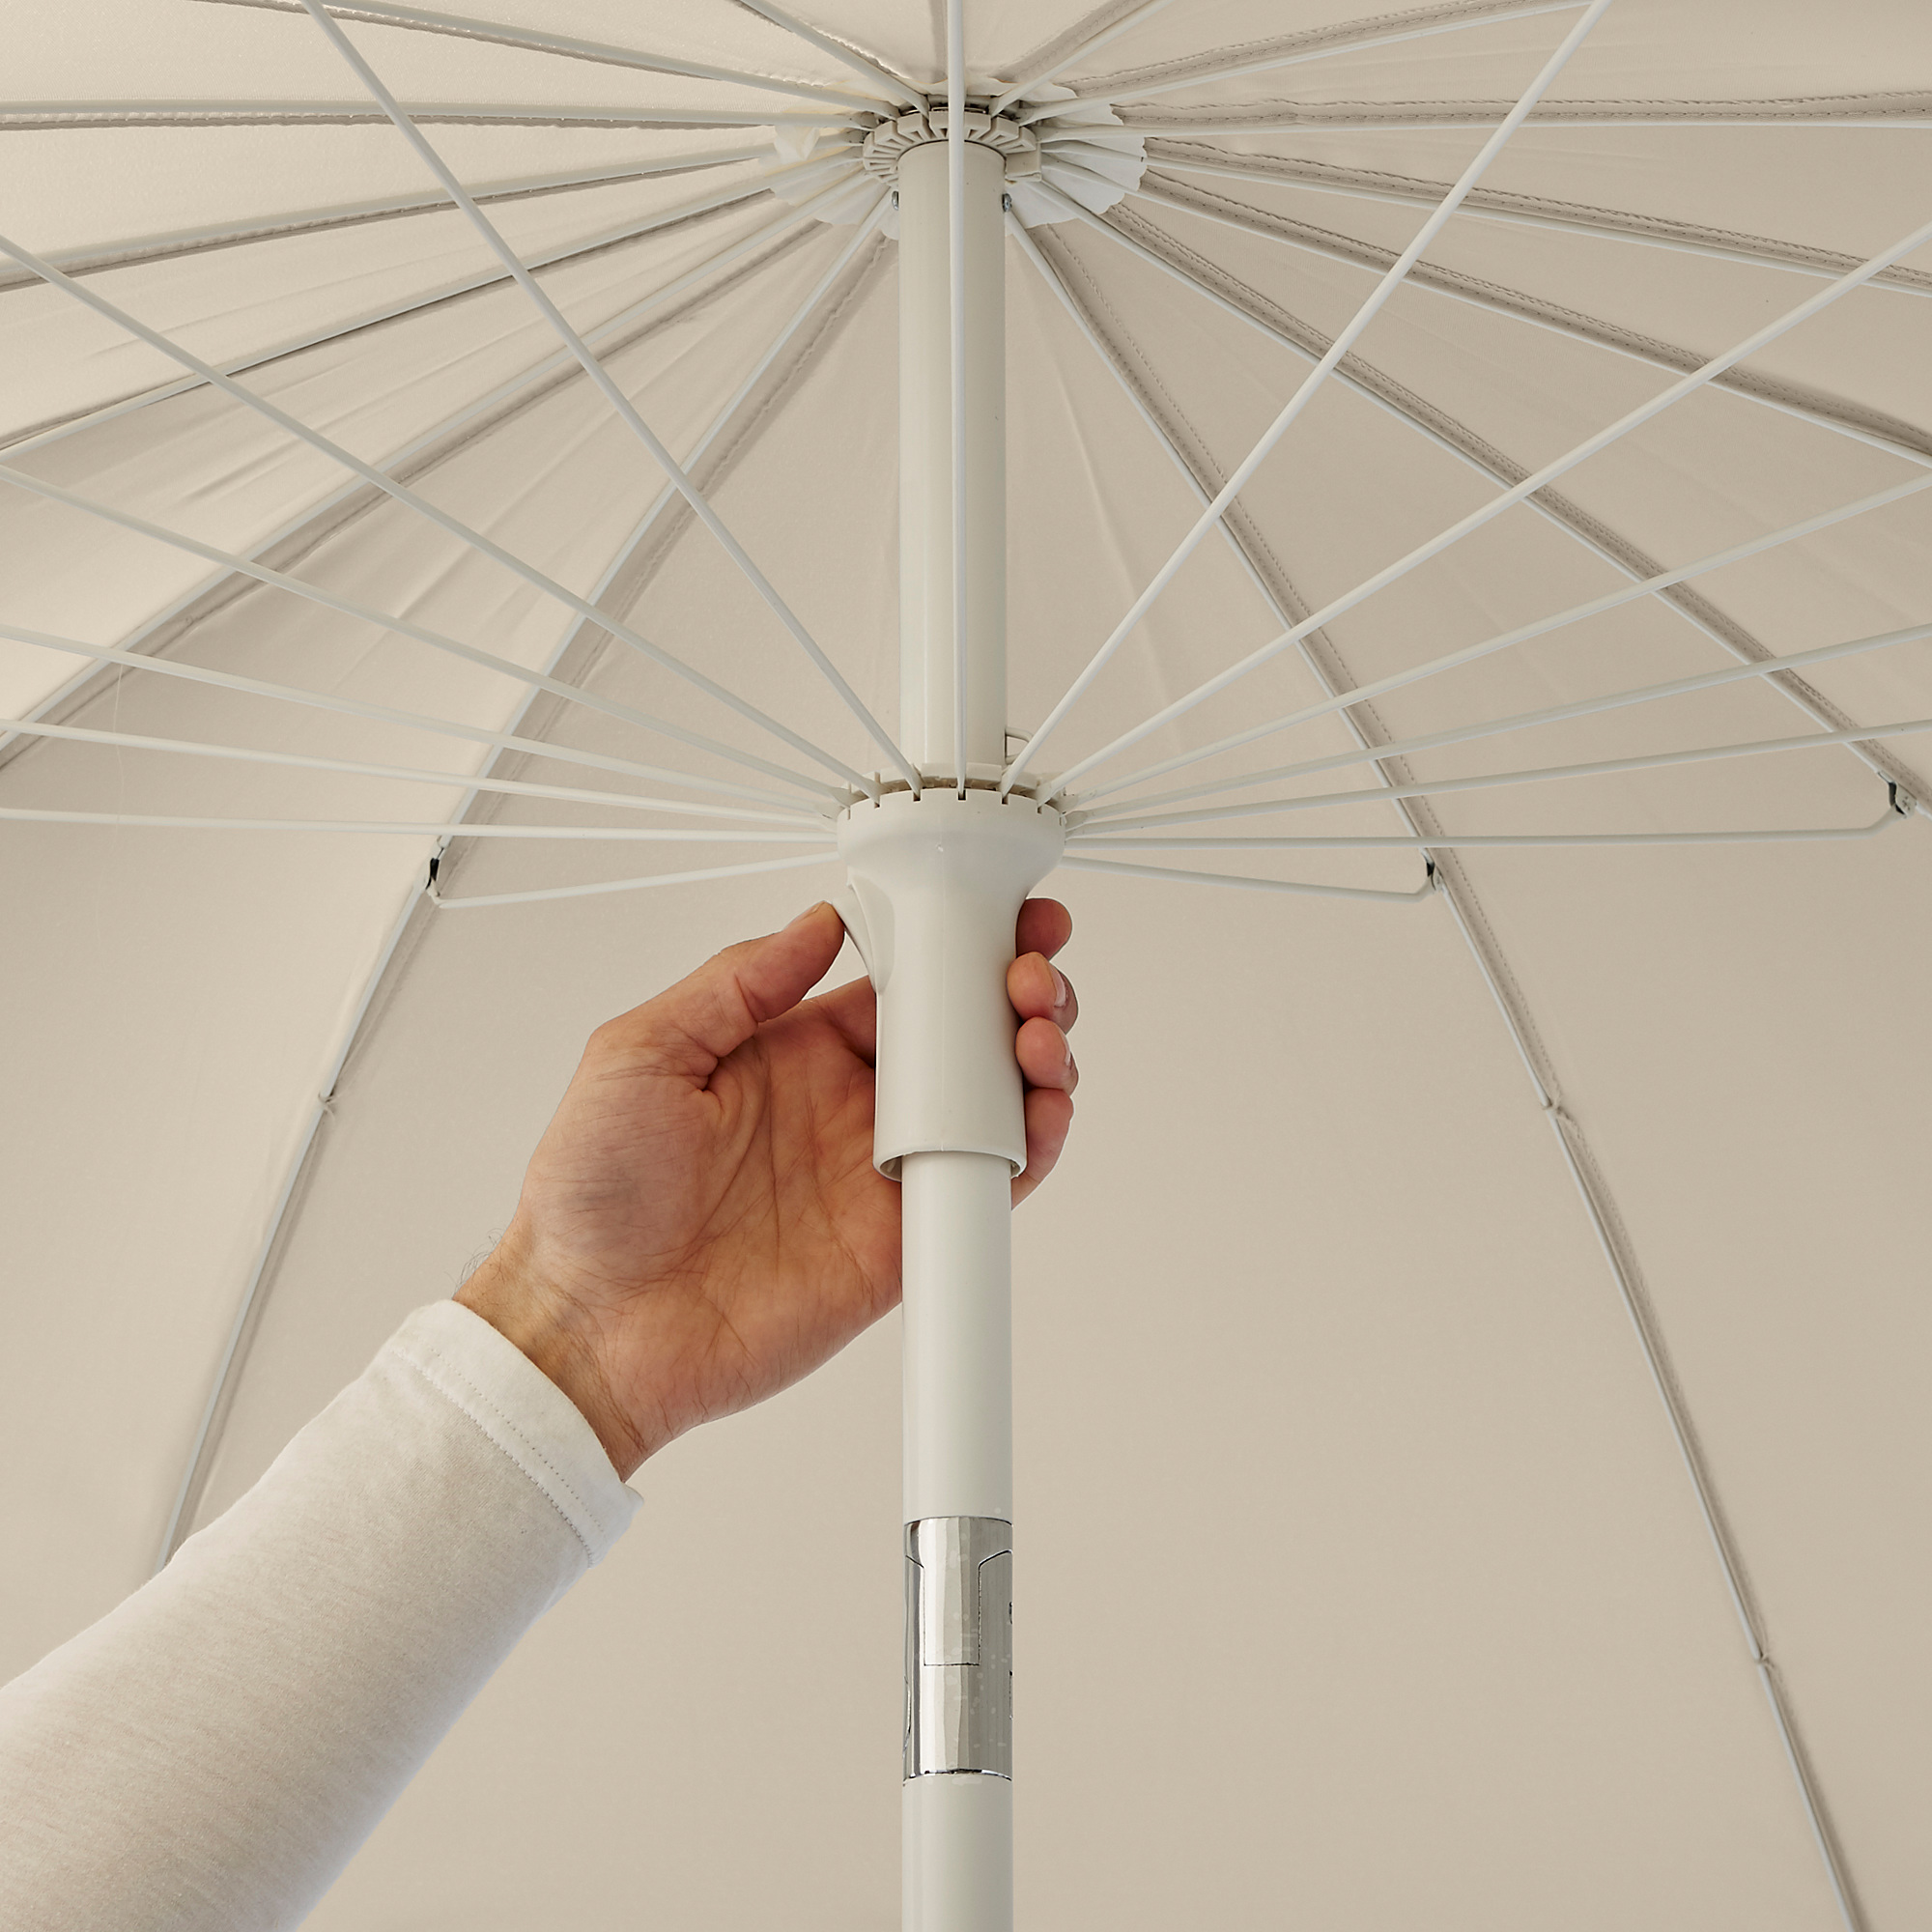 SAMSÖ parasol with base